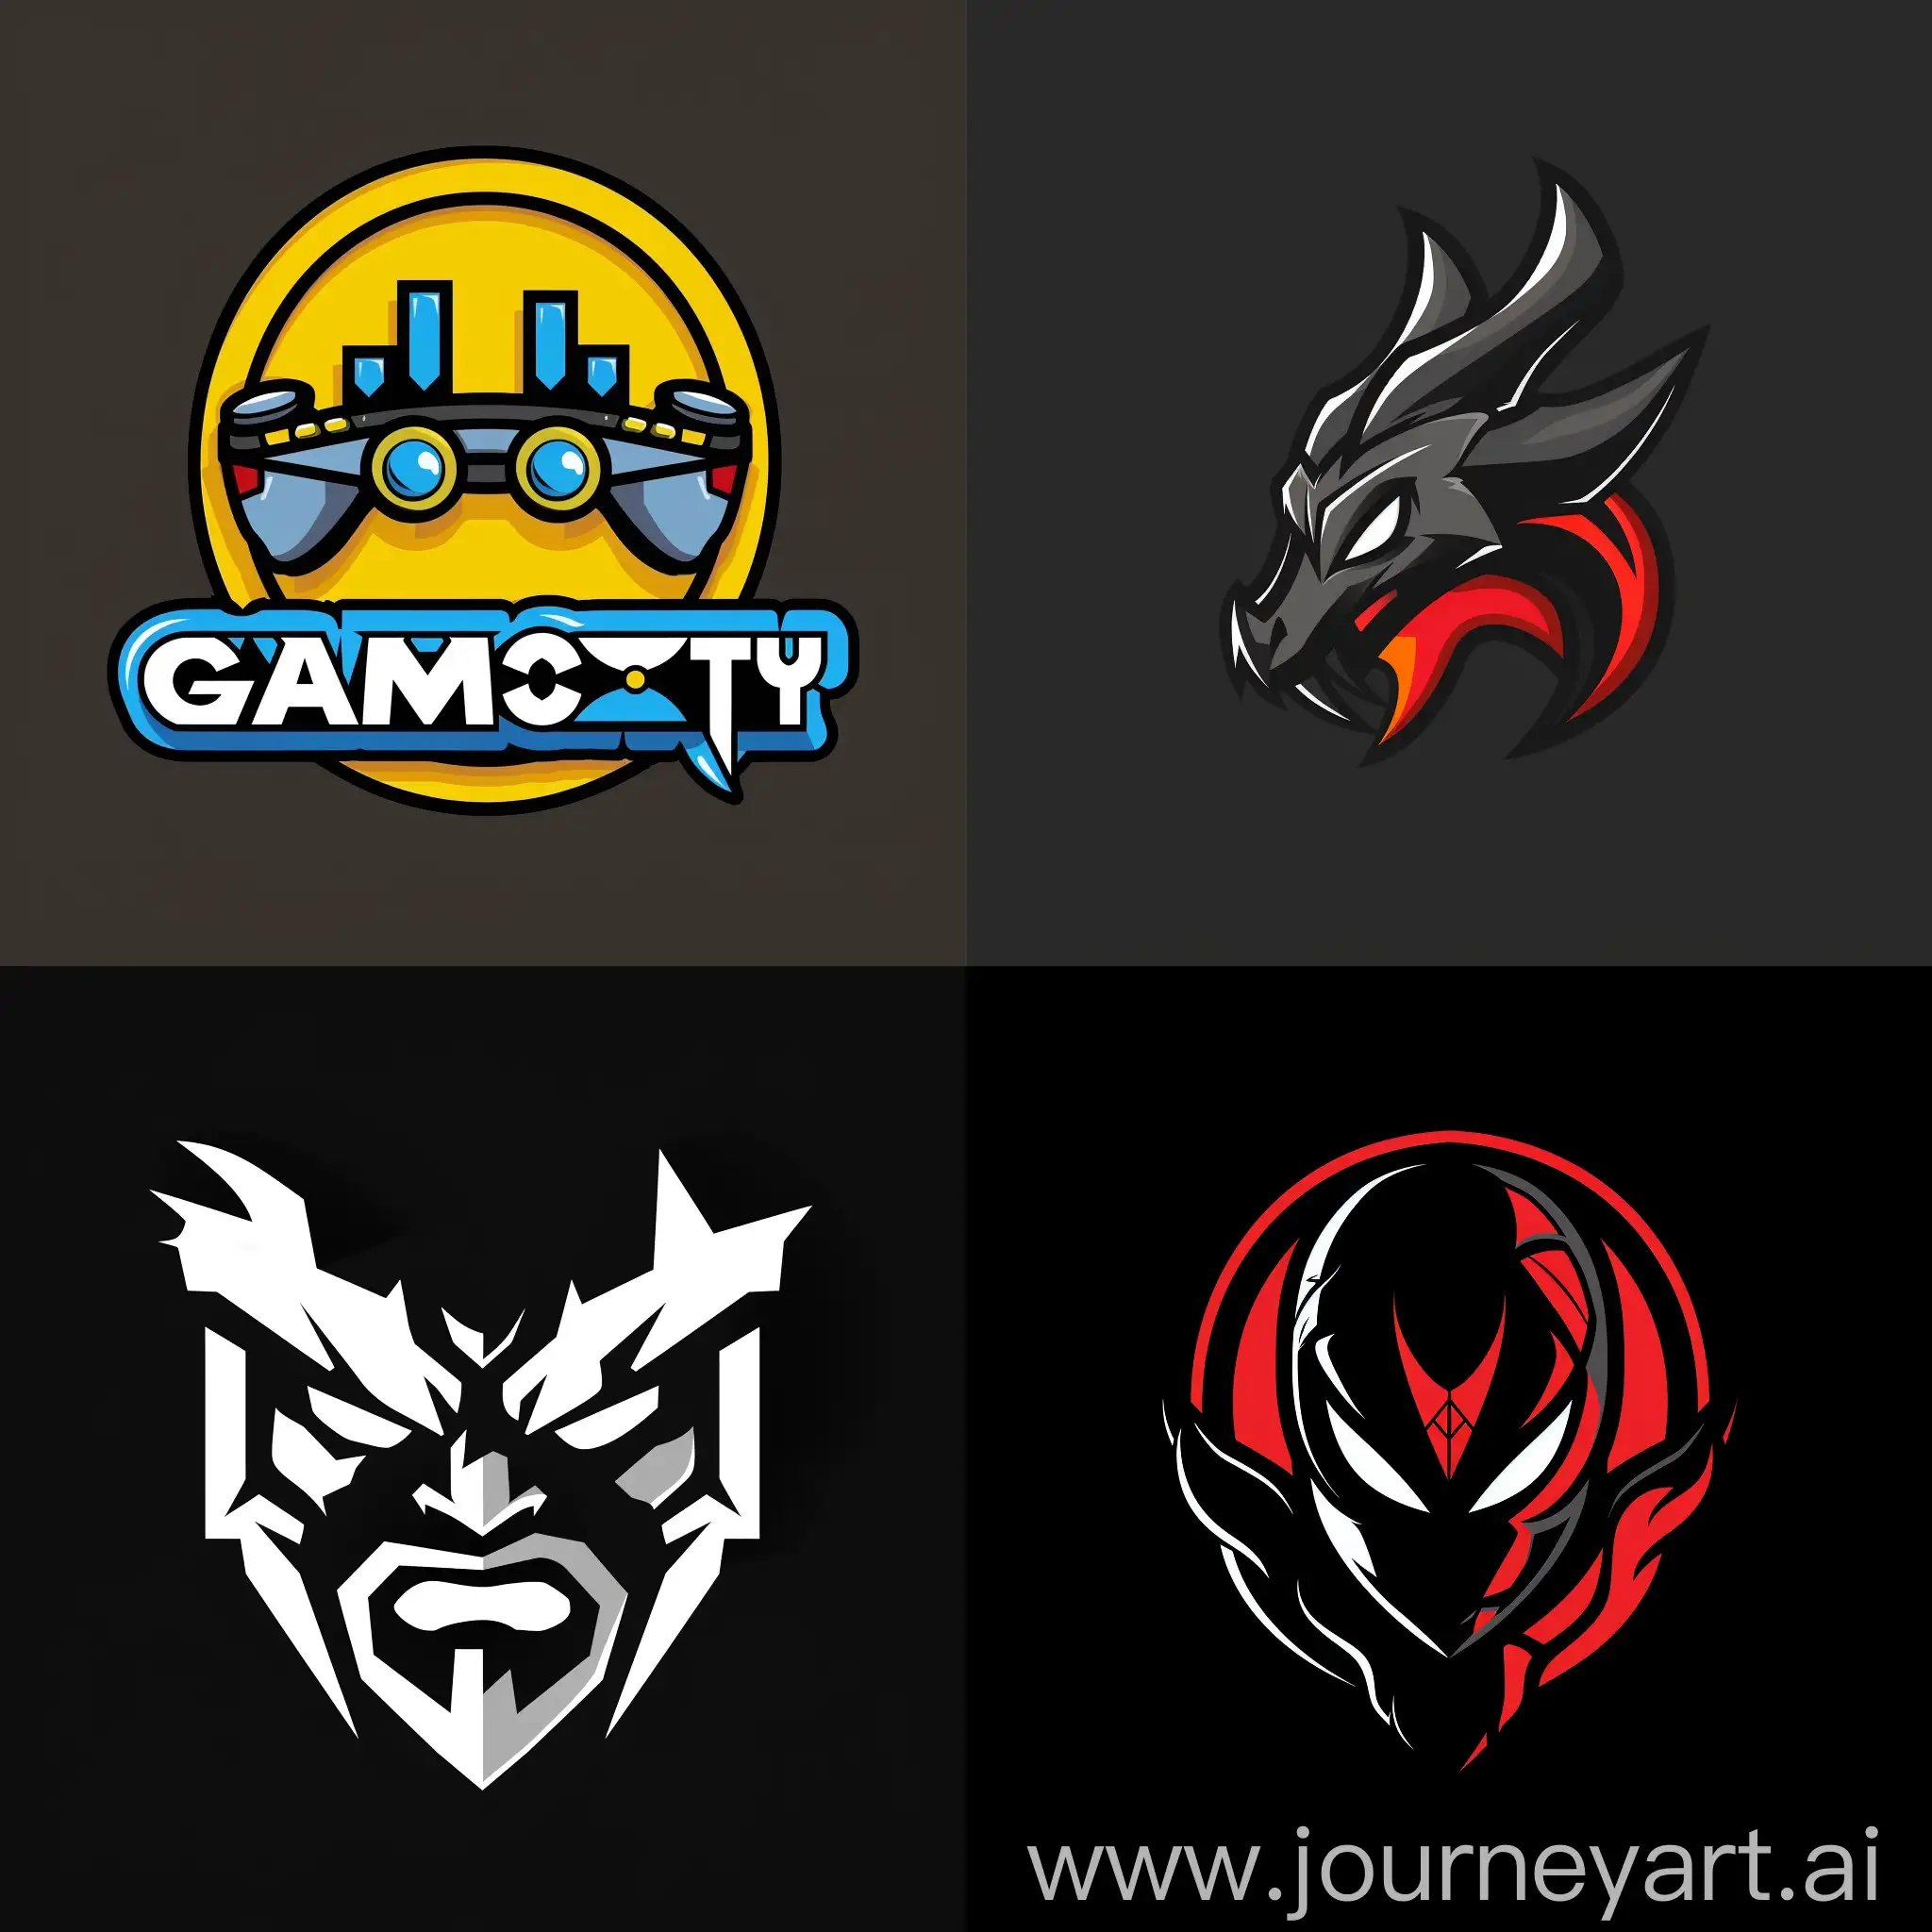 Creative-Gaming-Logo-Design-with-Urban-Cityscape-Theme